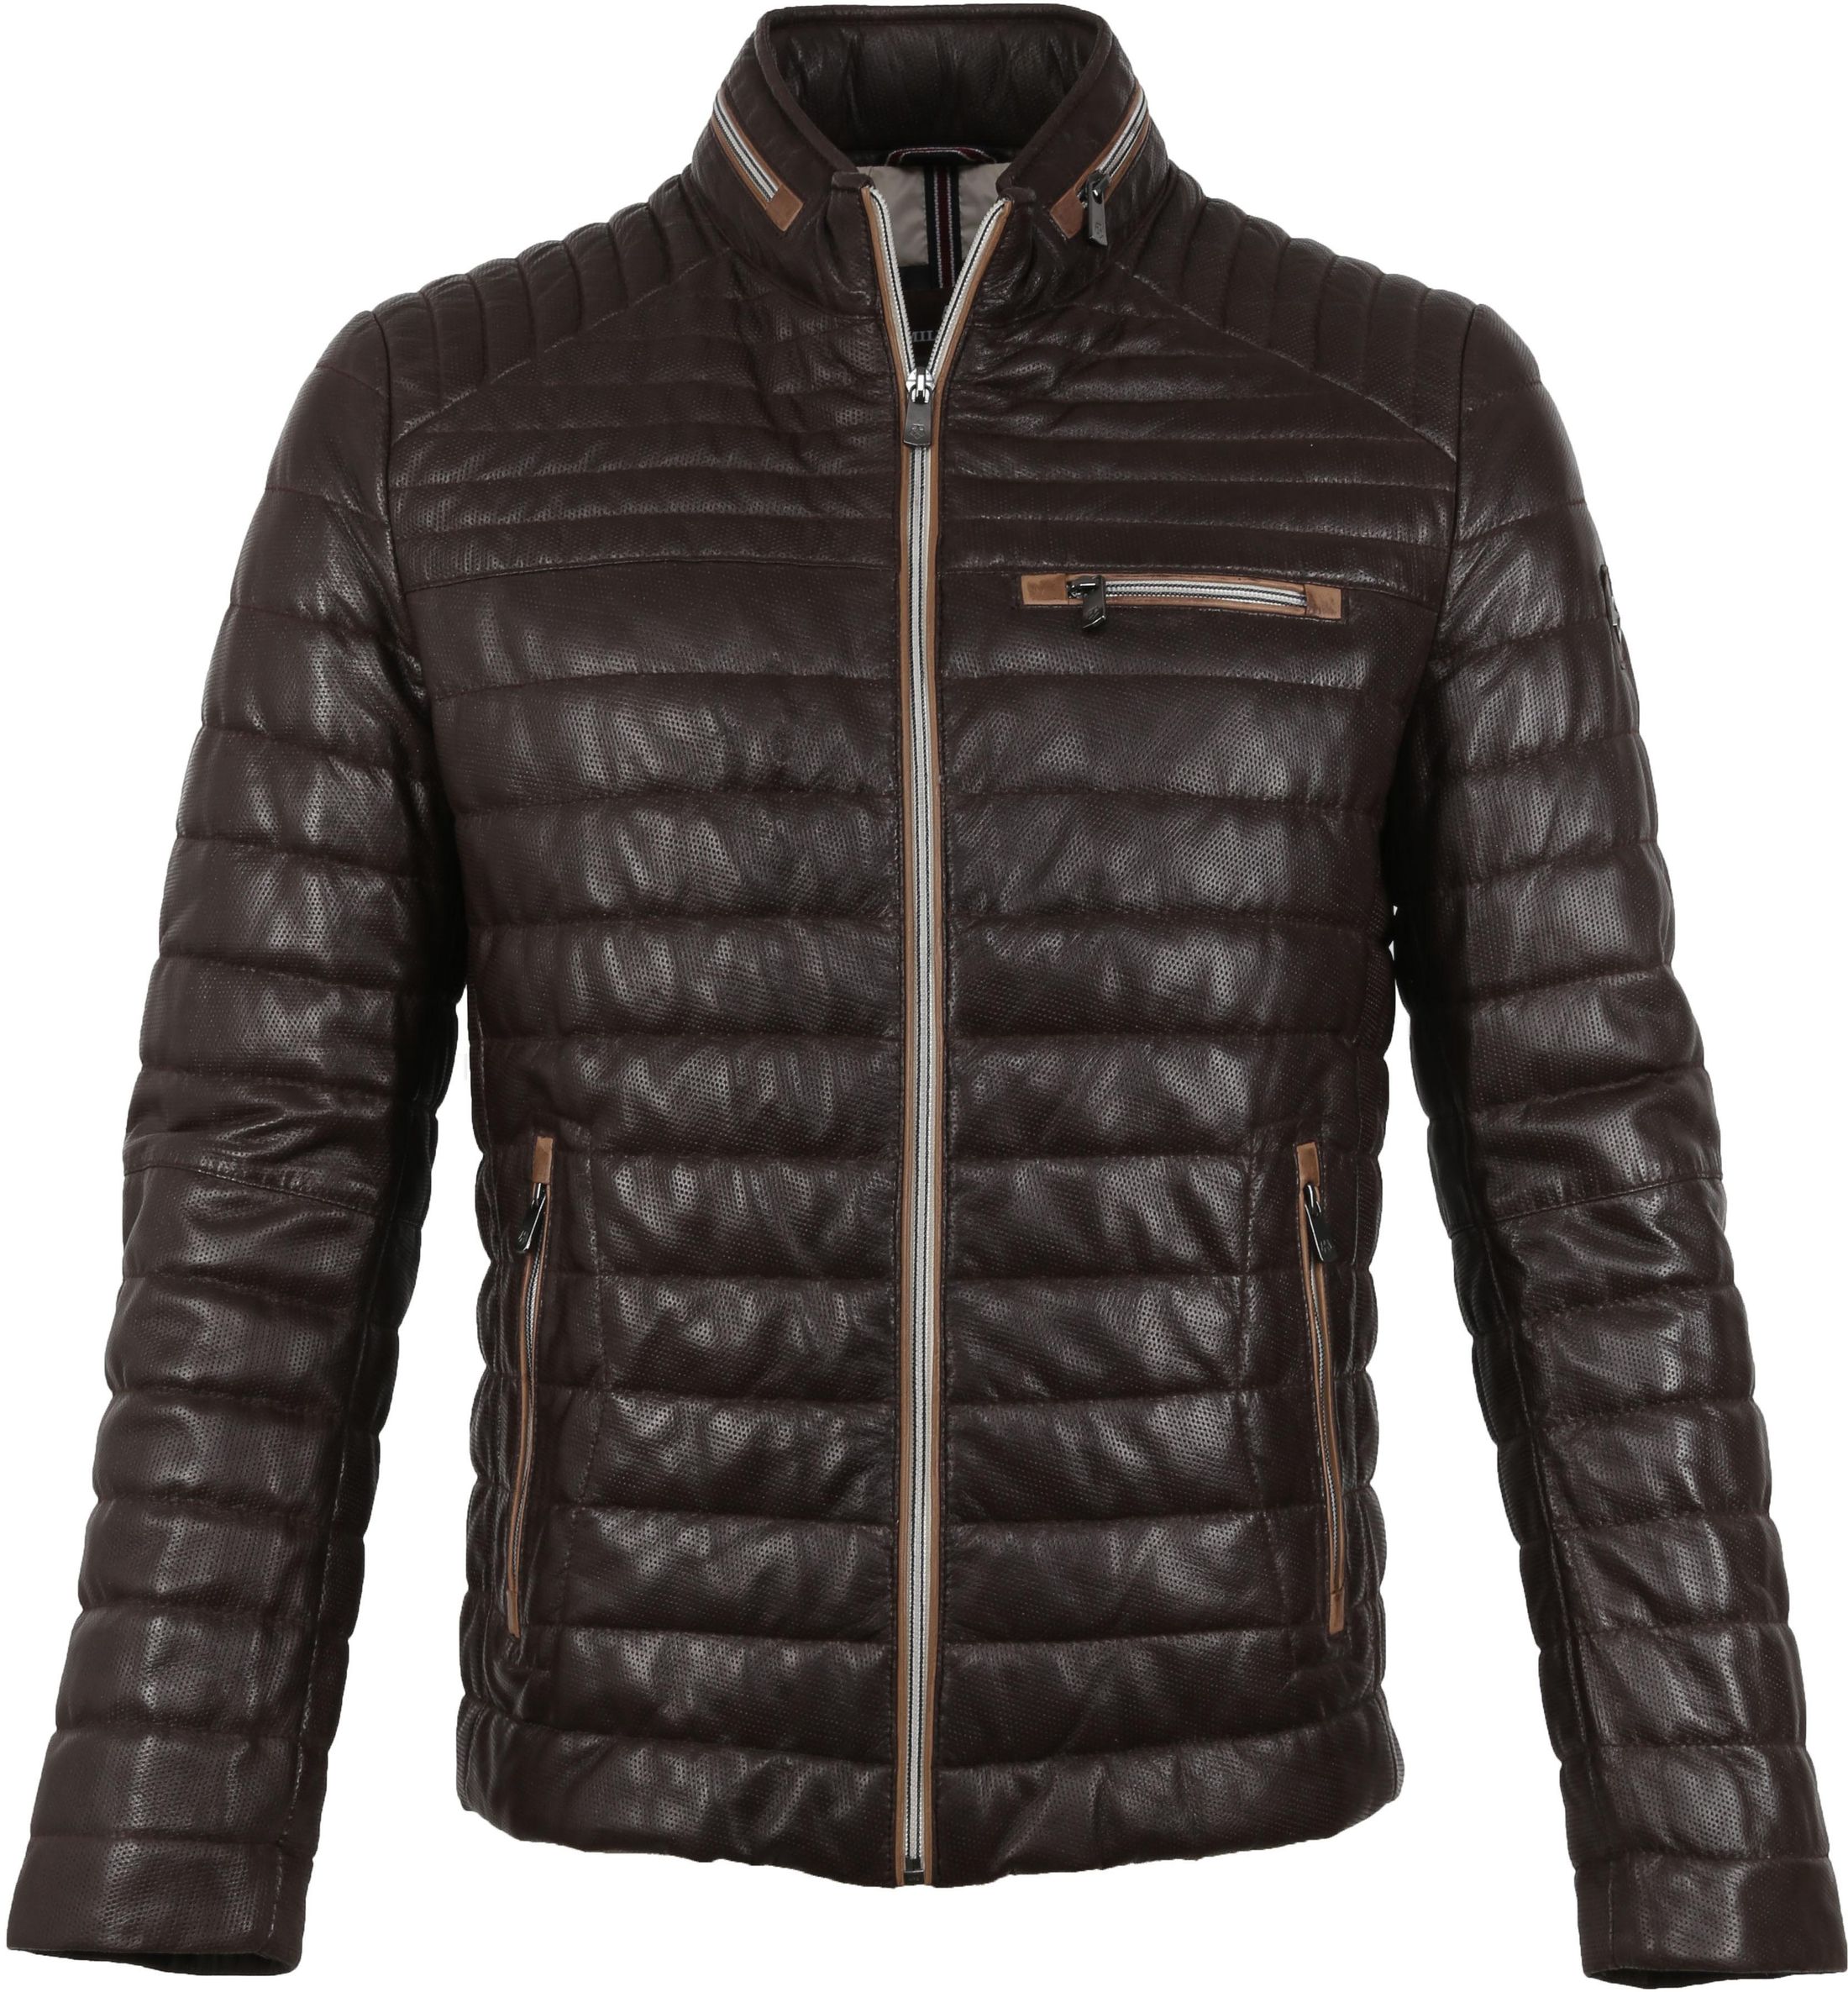 Milestone Terenzio Leather Jacket Dark Brown size 38-R